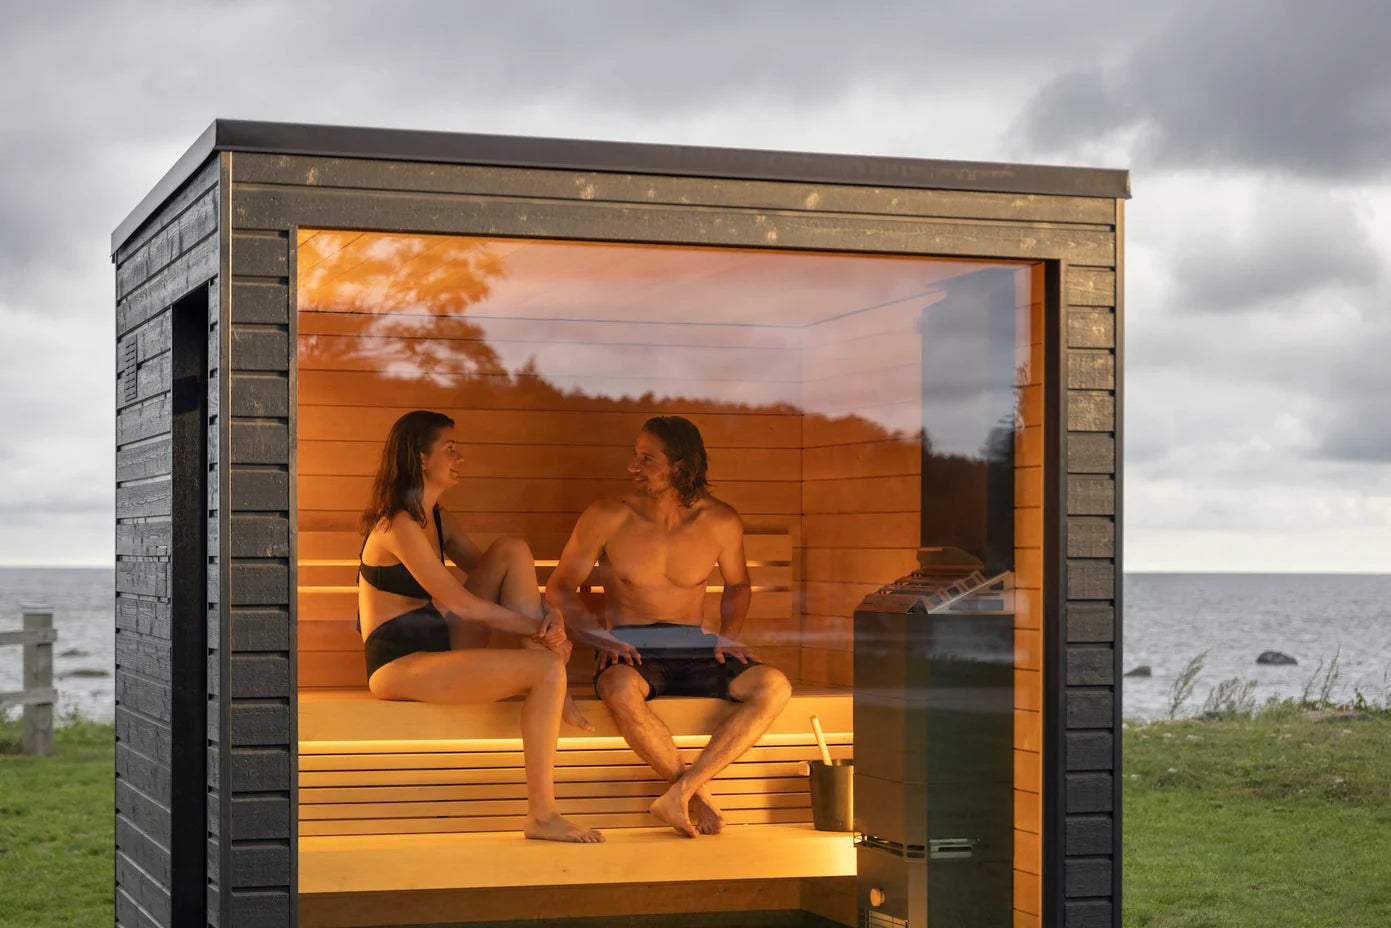 SaunaLife Model G6 Pre-Assembled Outdoor Home Sauna